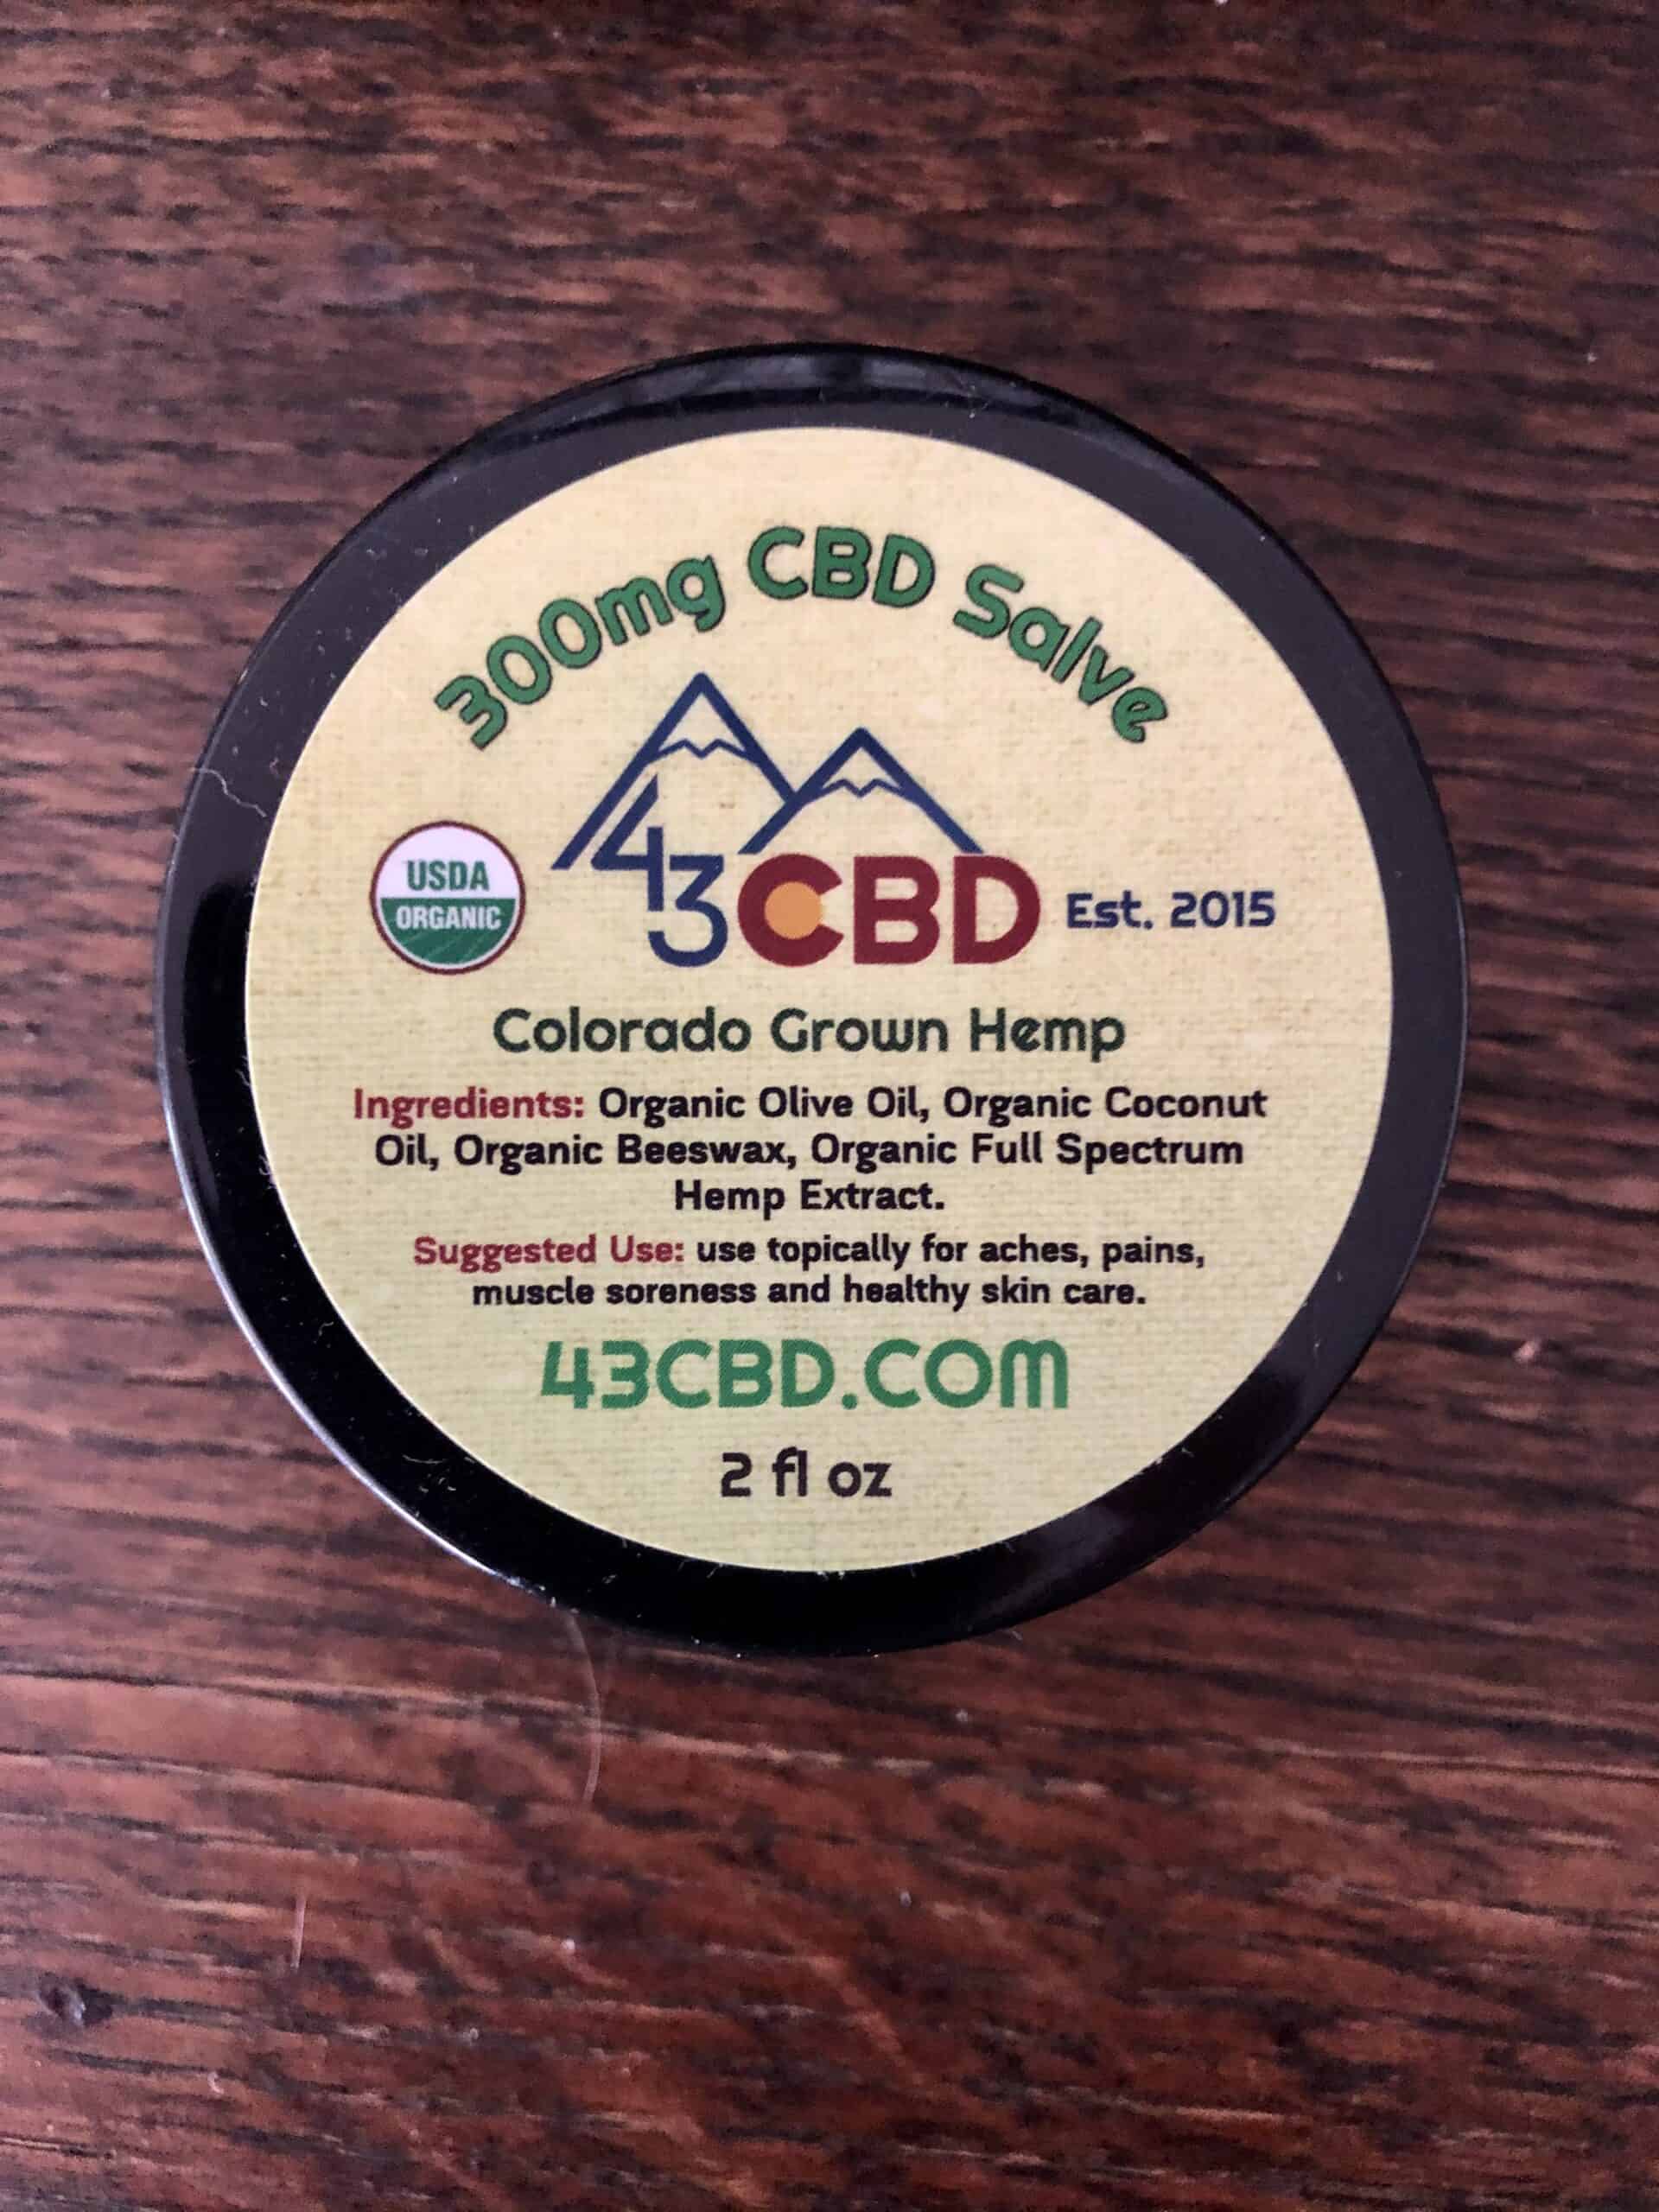 43 CBD Organic CBD Oil Salve 300mg Save On Cannabis Review